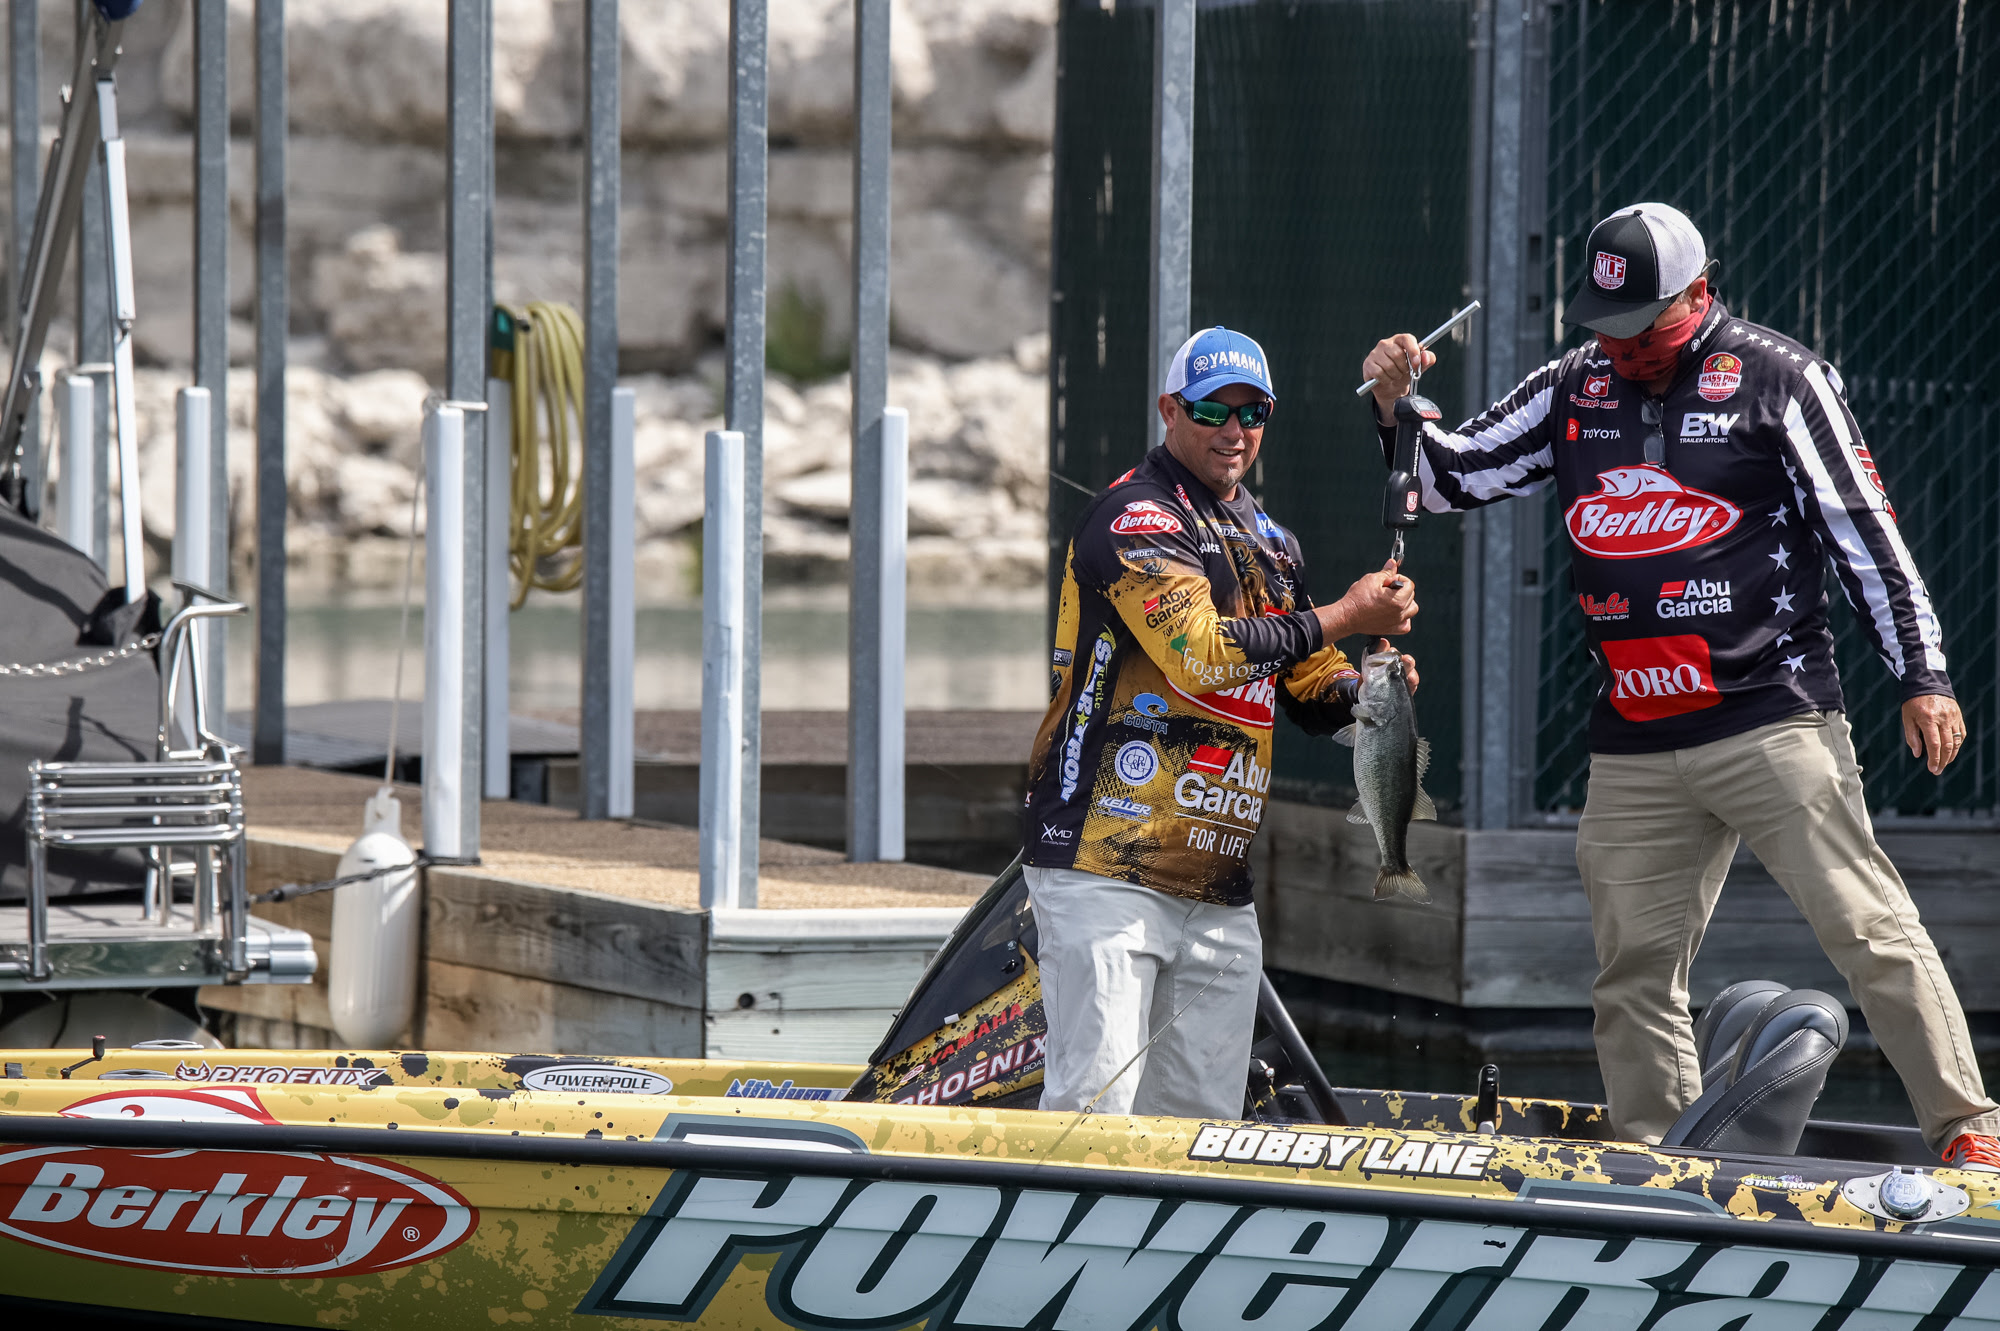 Abu Garcia Veritas Tournament rods with Major League Fishing Pro